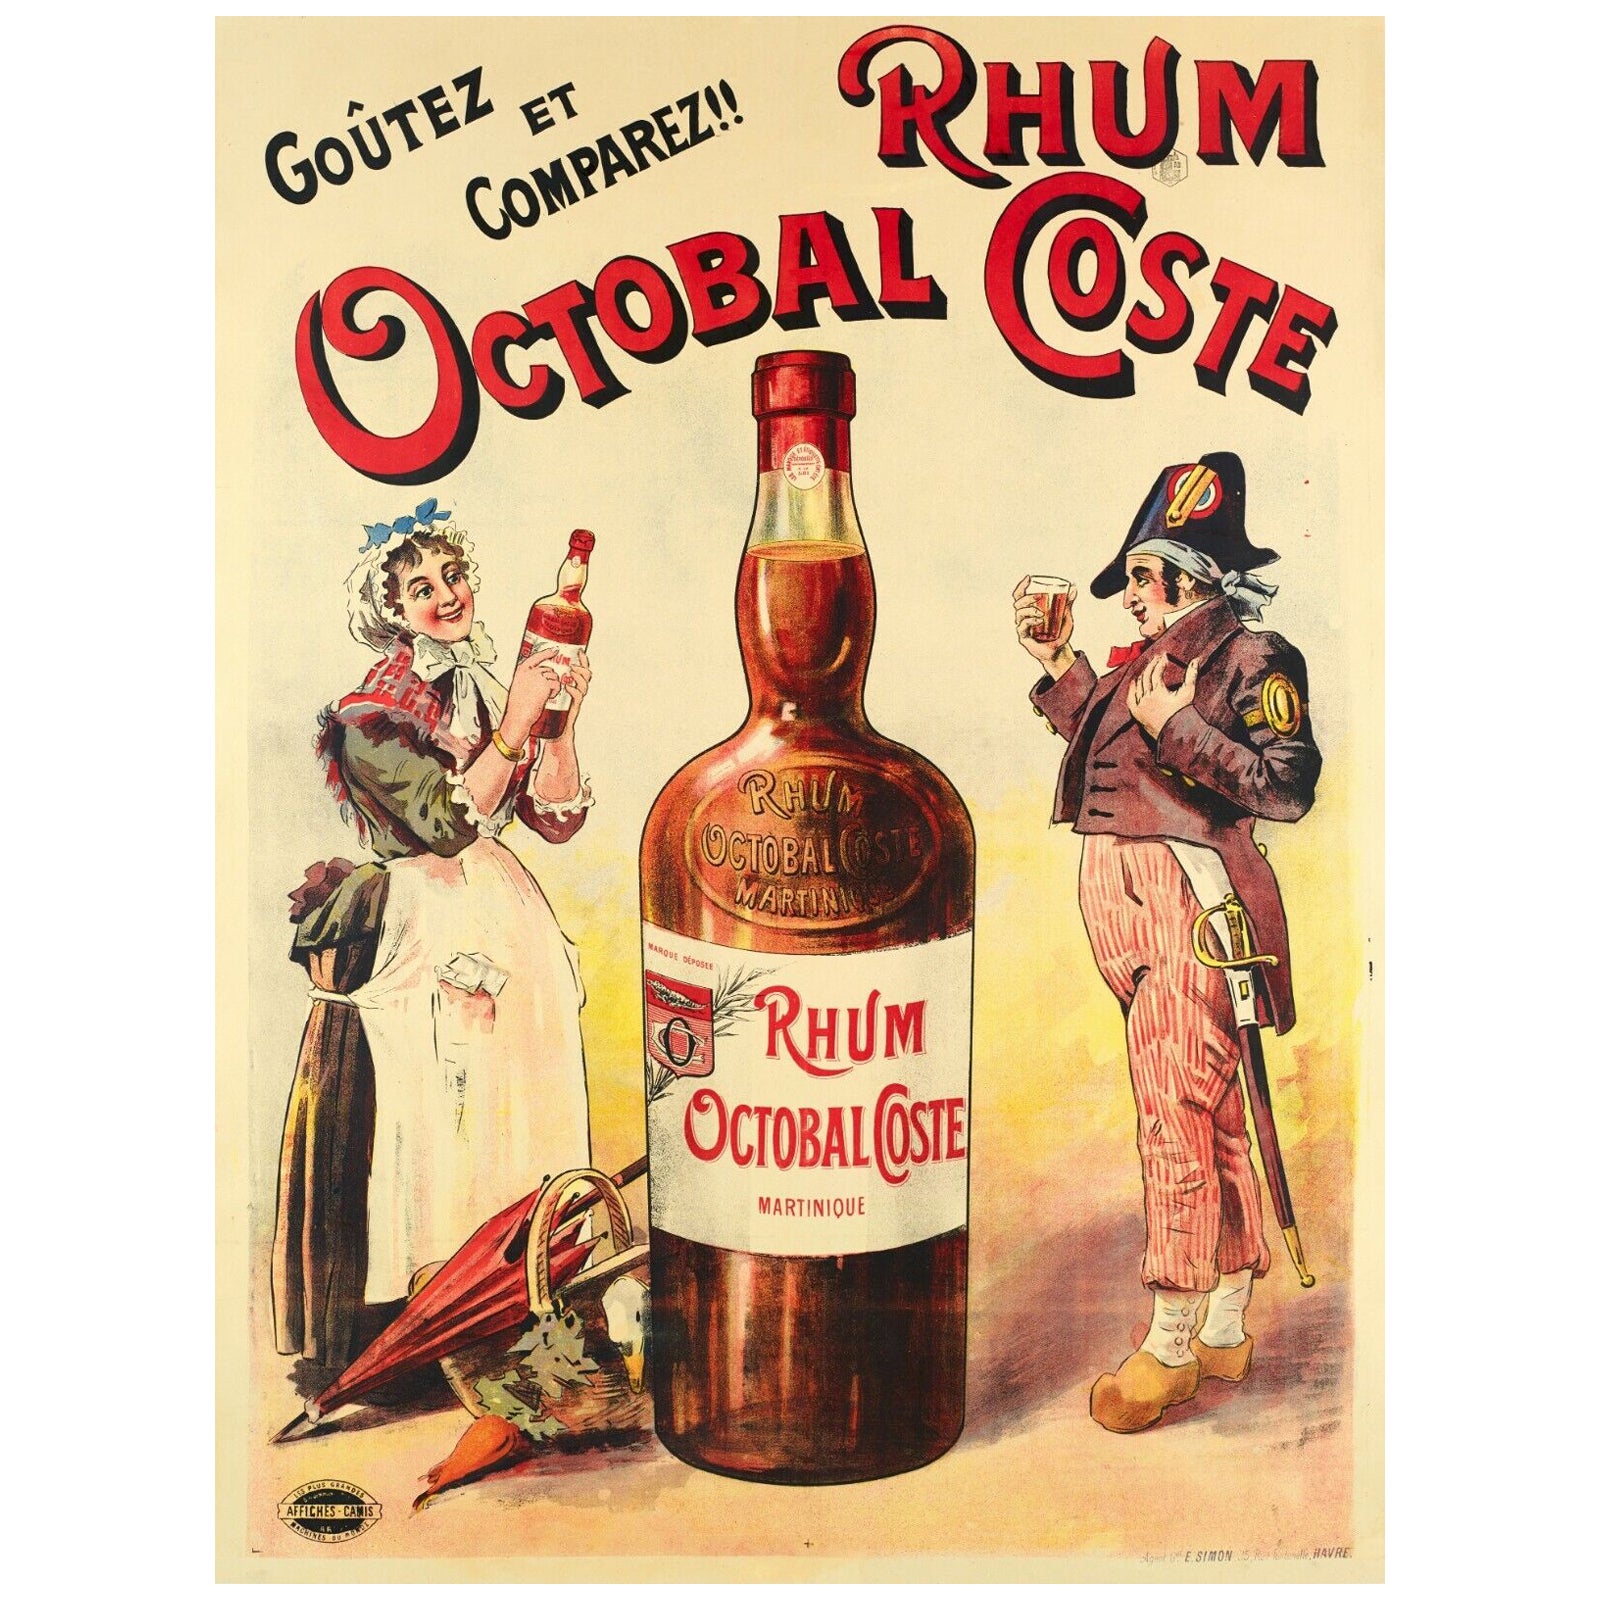 Original Vintage Poster-Rhum Octobal Coste-Martinique-Napoléon, c.1890 For Sale